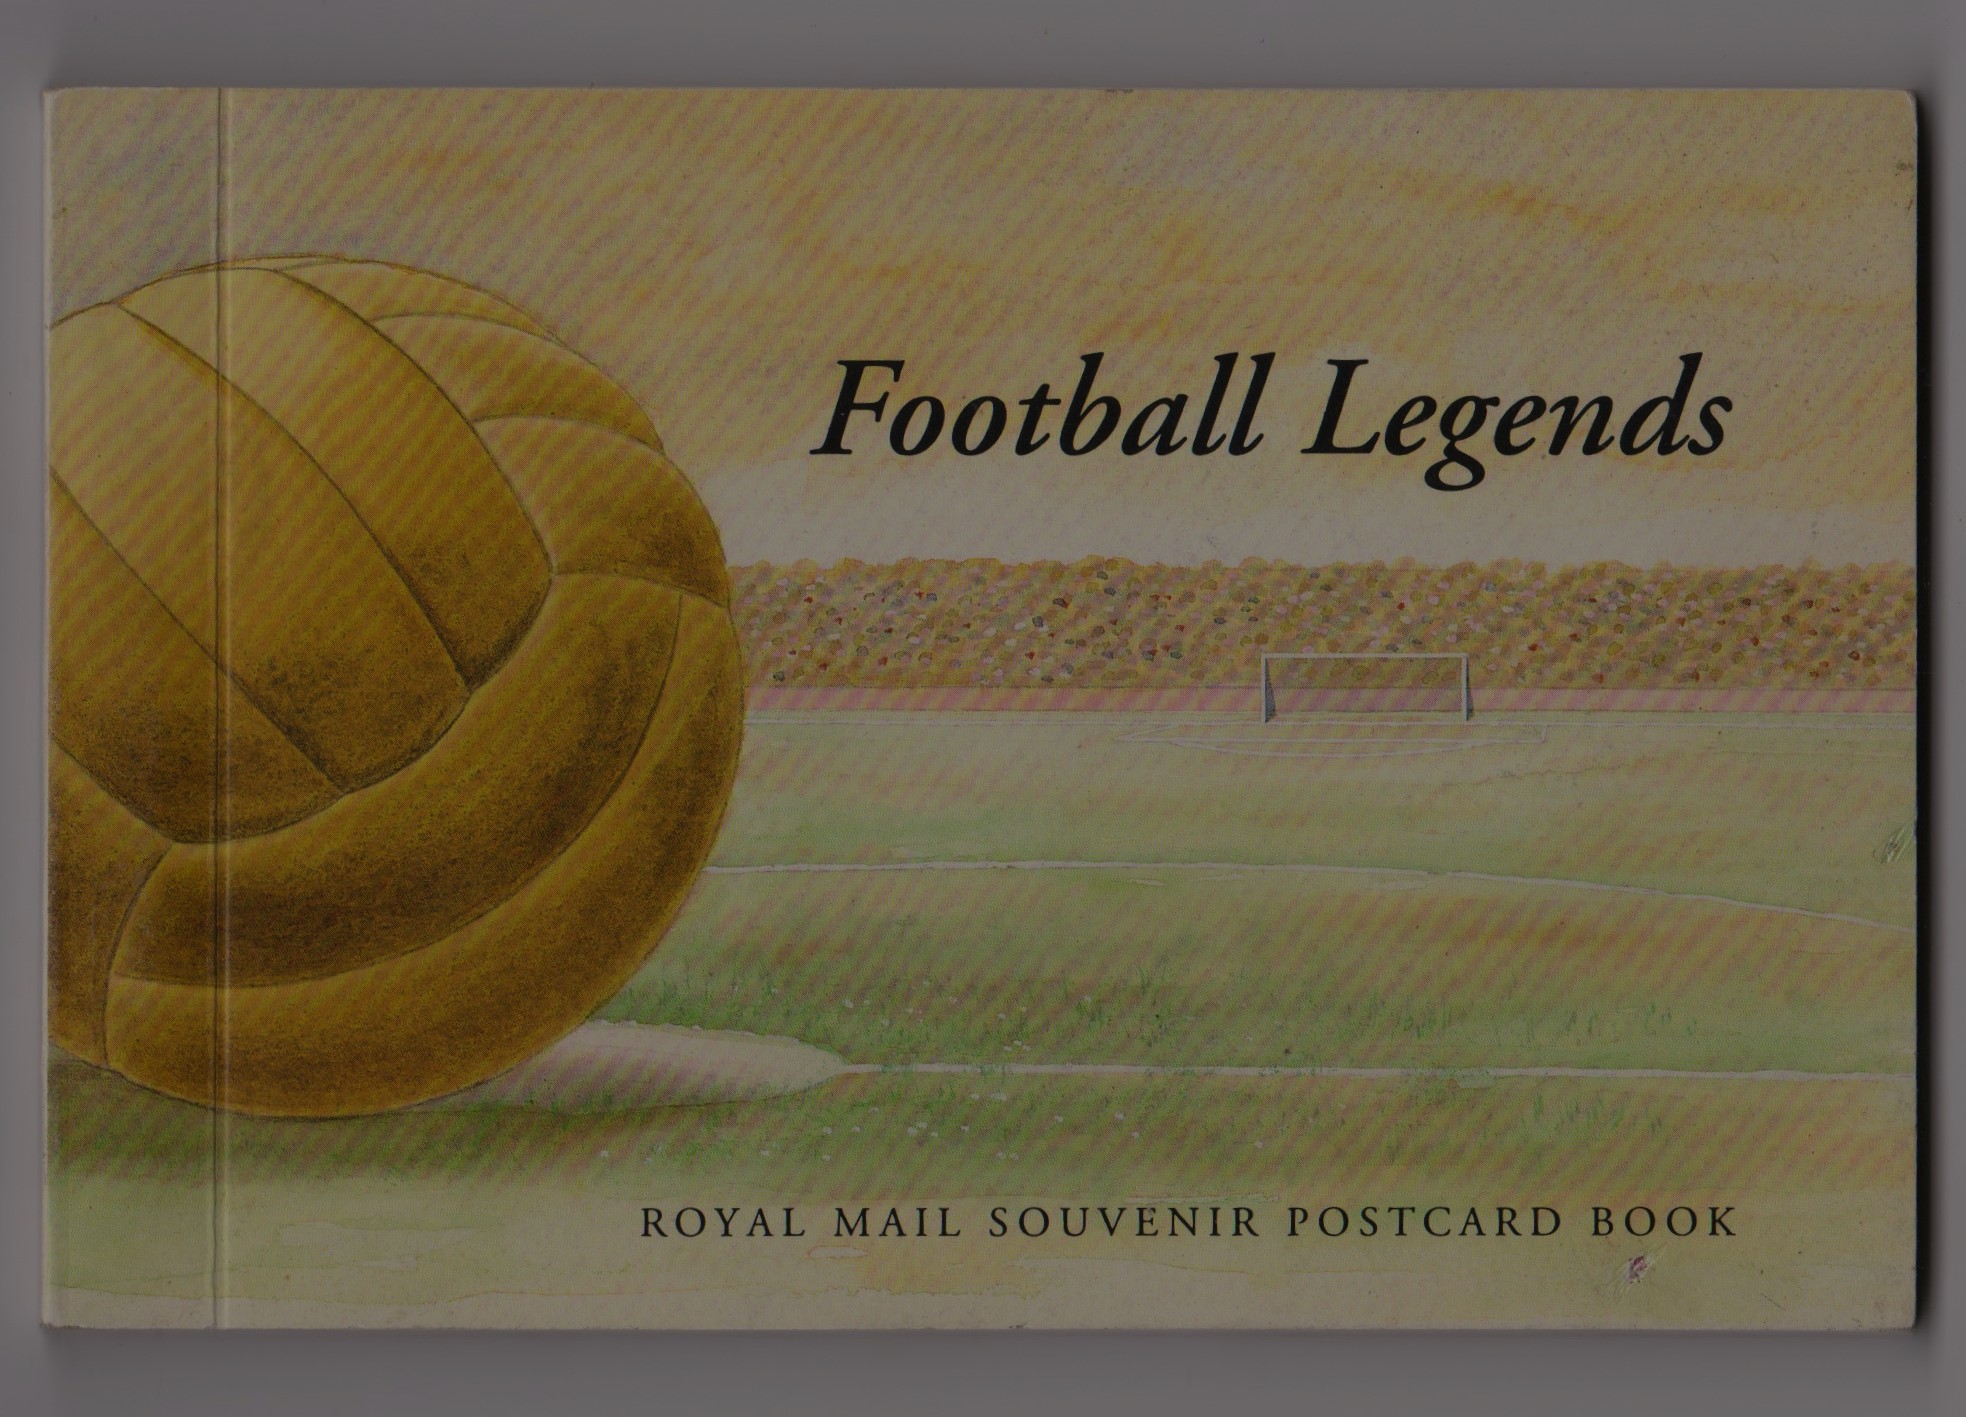 FOOTBALL LEGENDS POSTCARD BOOK DUNCAN EDWARDS MANCHESTER UNITED, BOBBY MOORE WEST HAM UNITED ETC. - Image 2 of 2